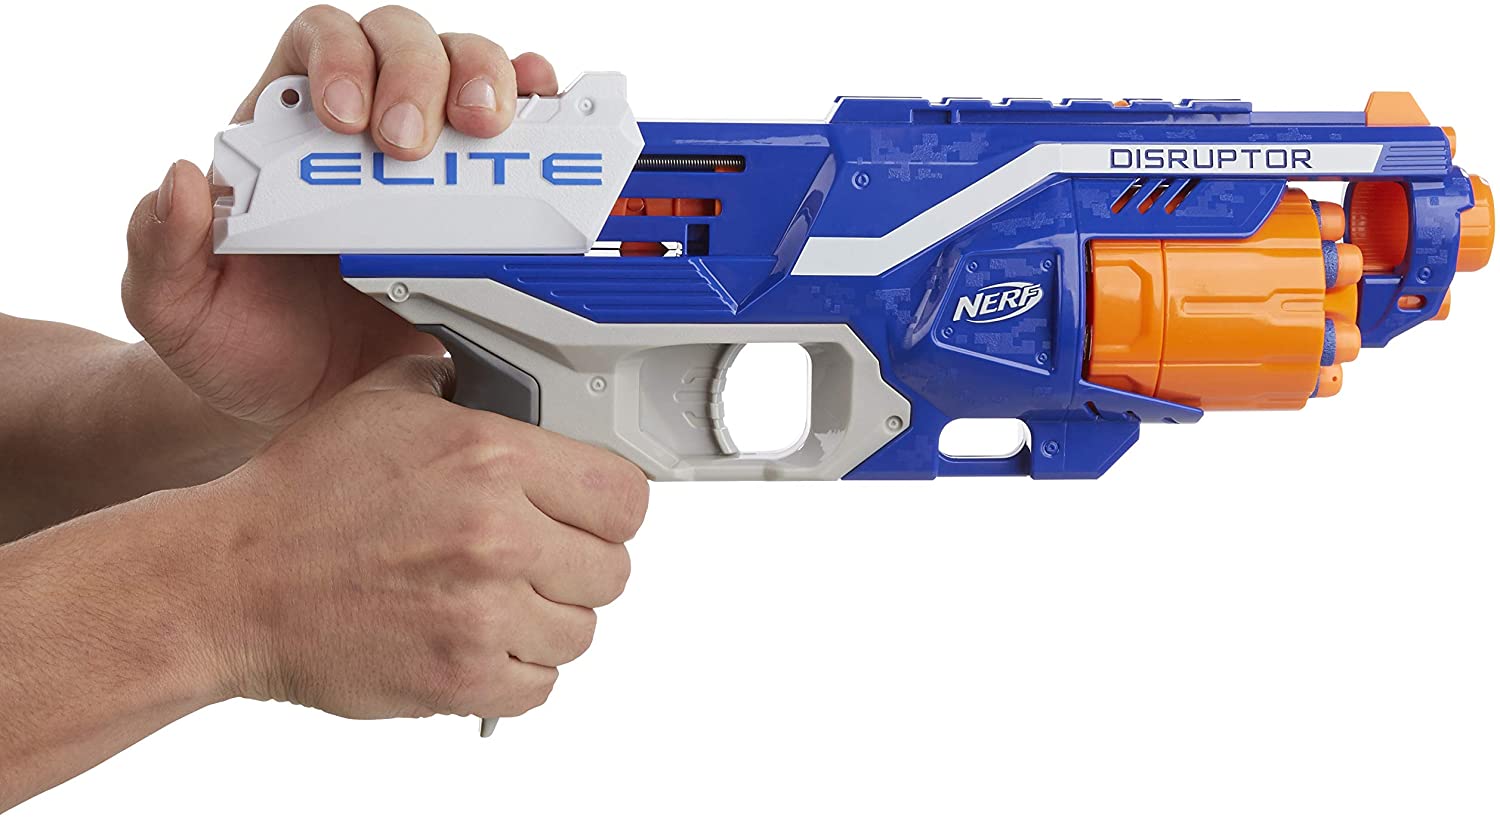 Nerf N-Strike Elite Disruptor B9838